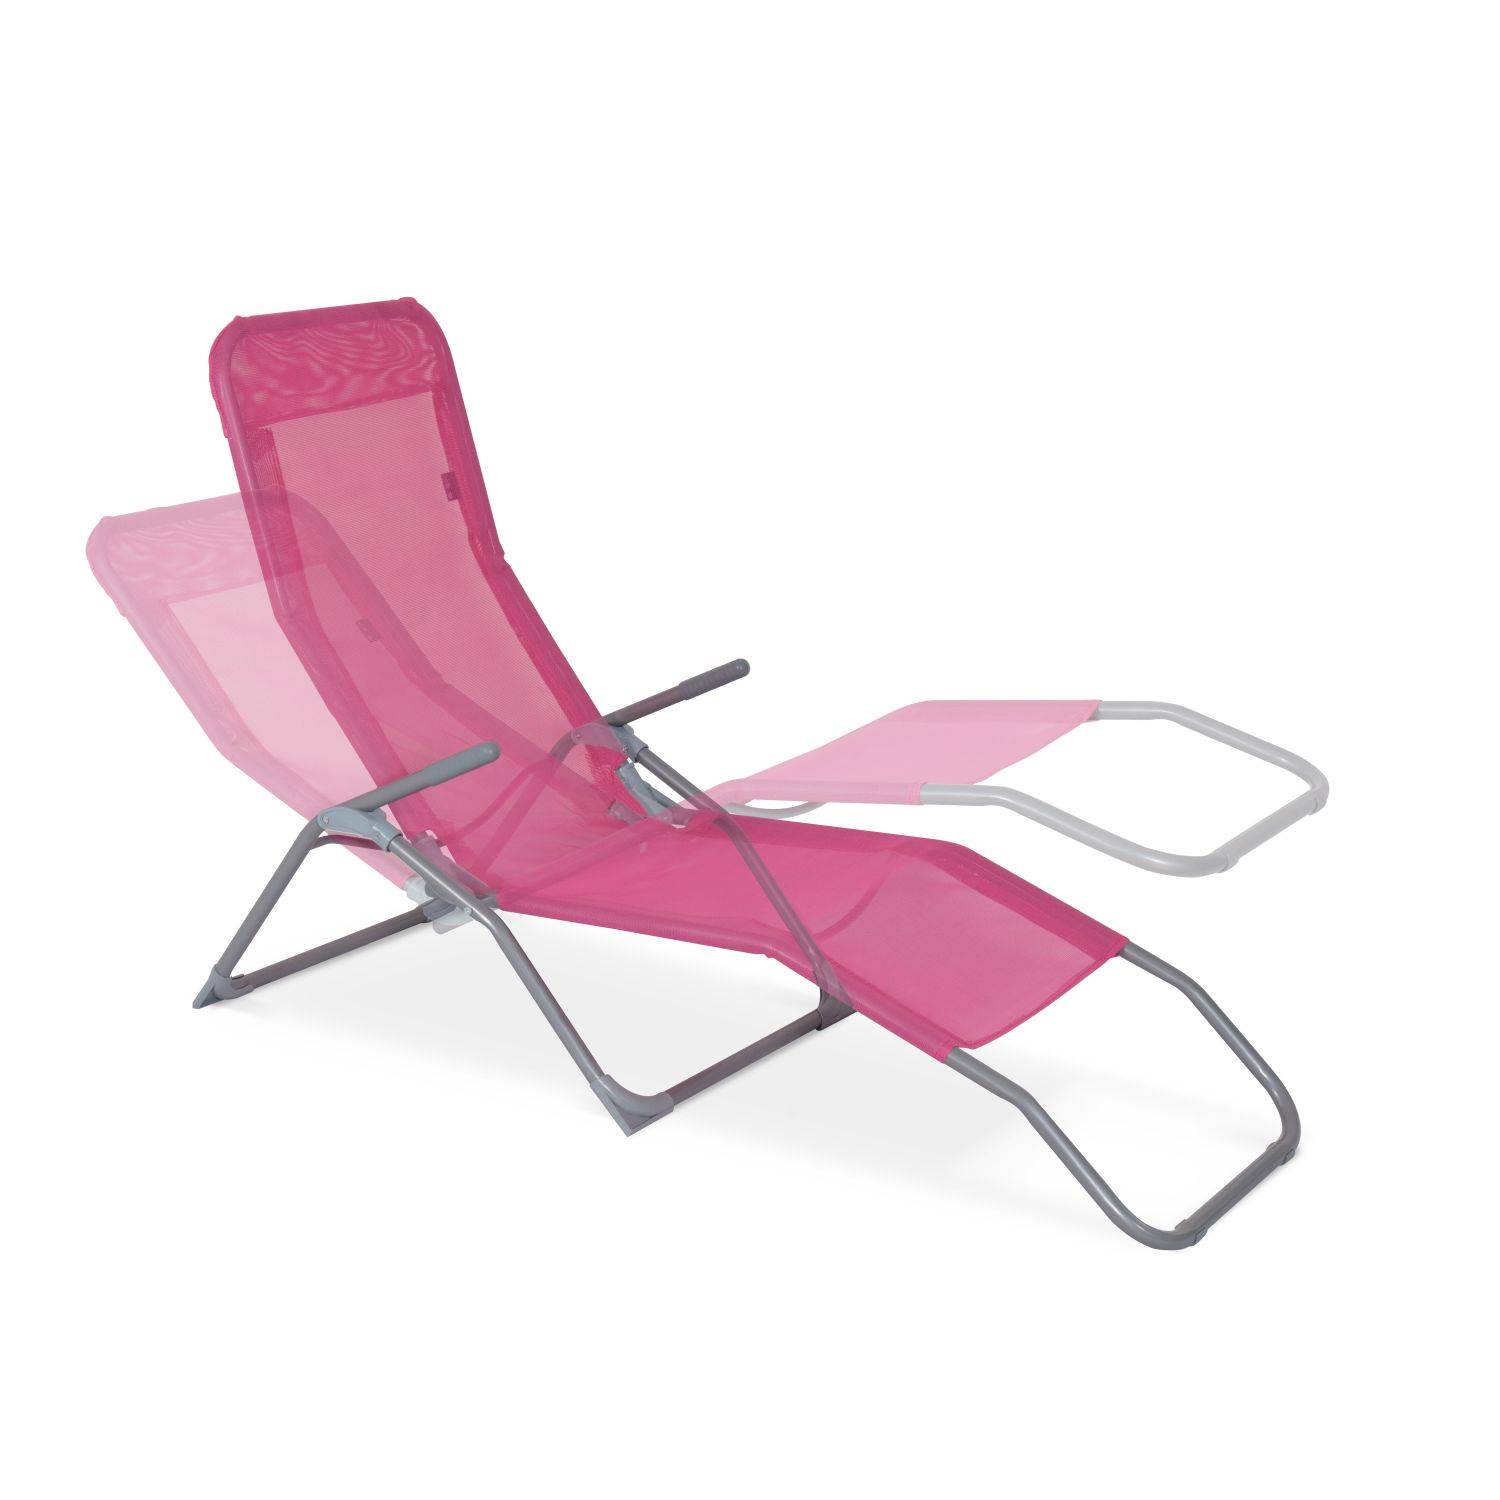 Set van 2 opvouwbare ligstoelen - Levito Roze - Ligstoelen van textileen, 2 posities, opvouwbare ligstoelen Photo3